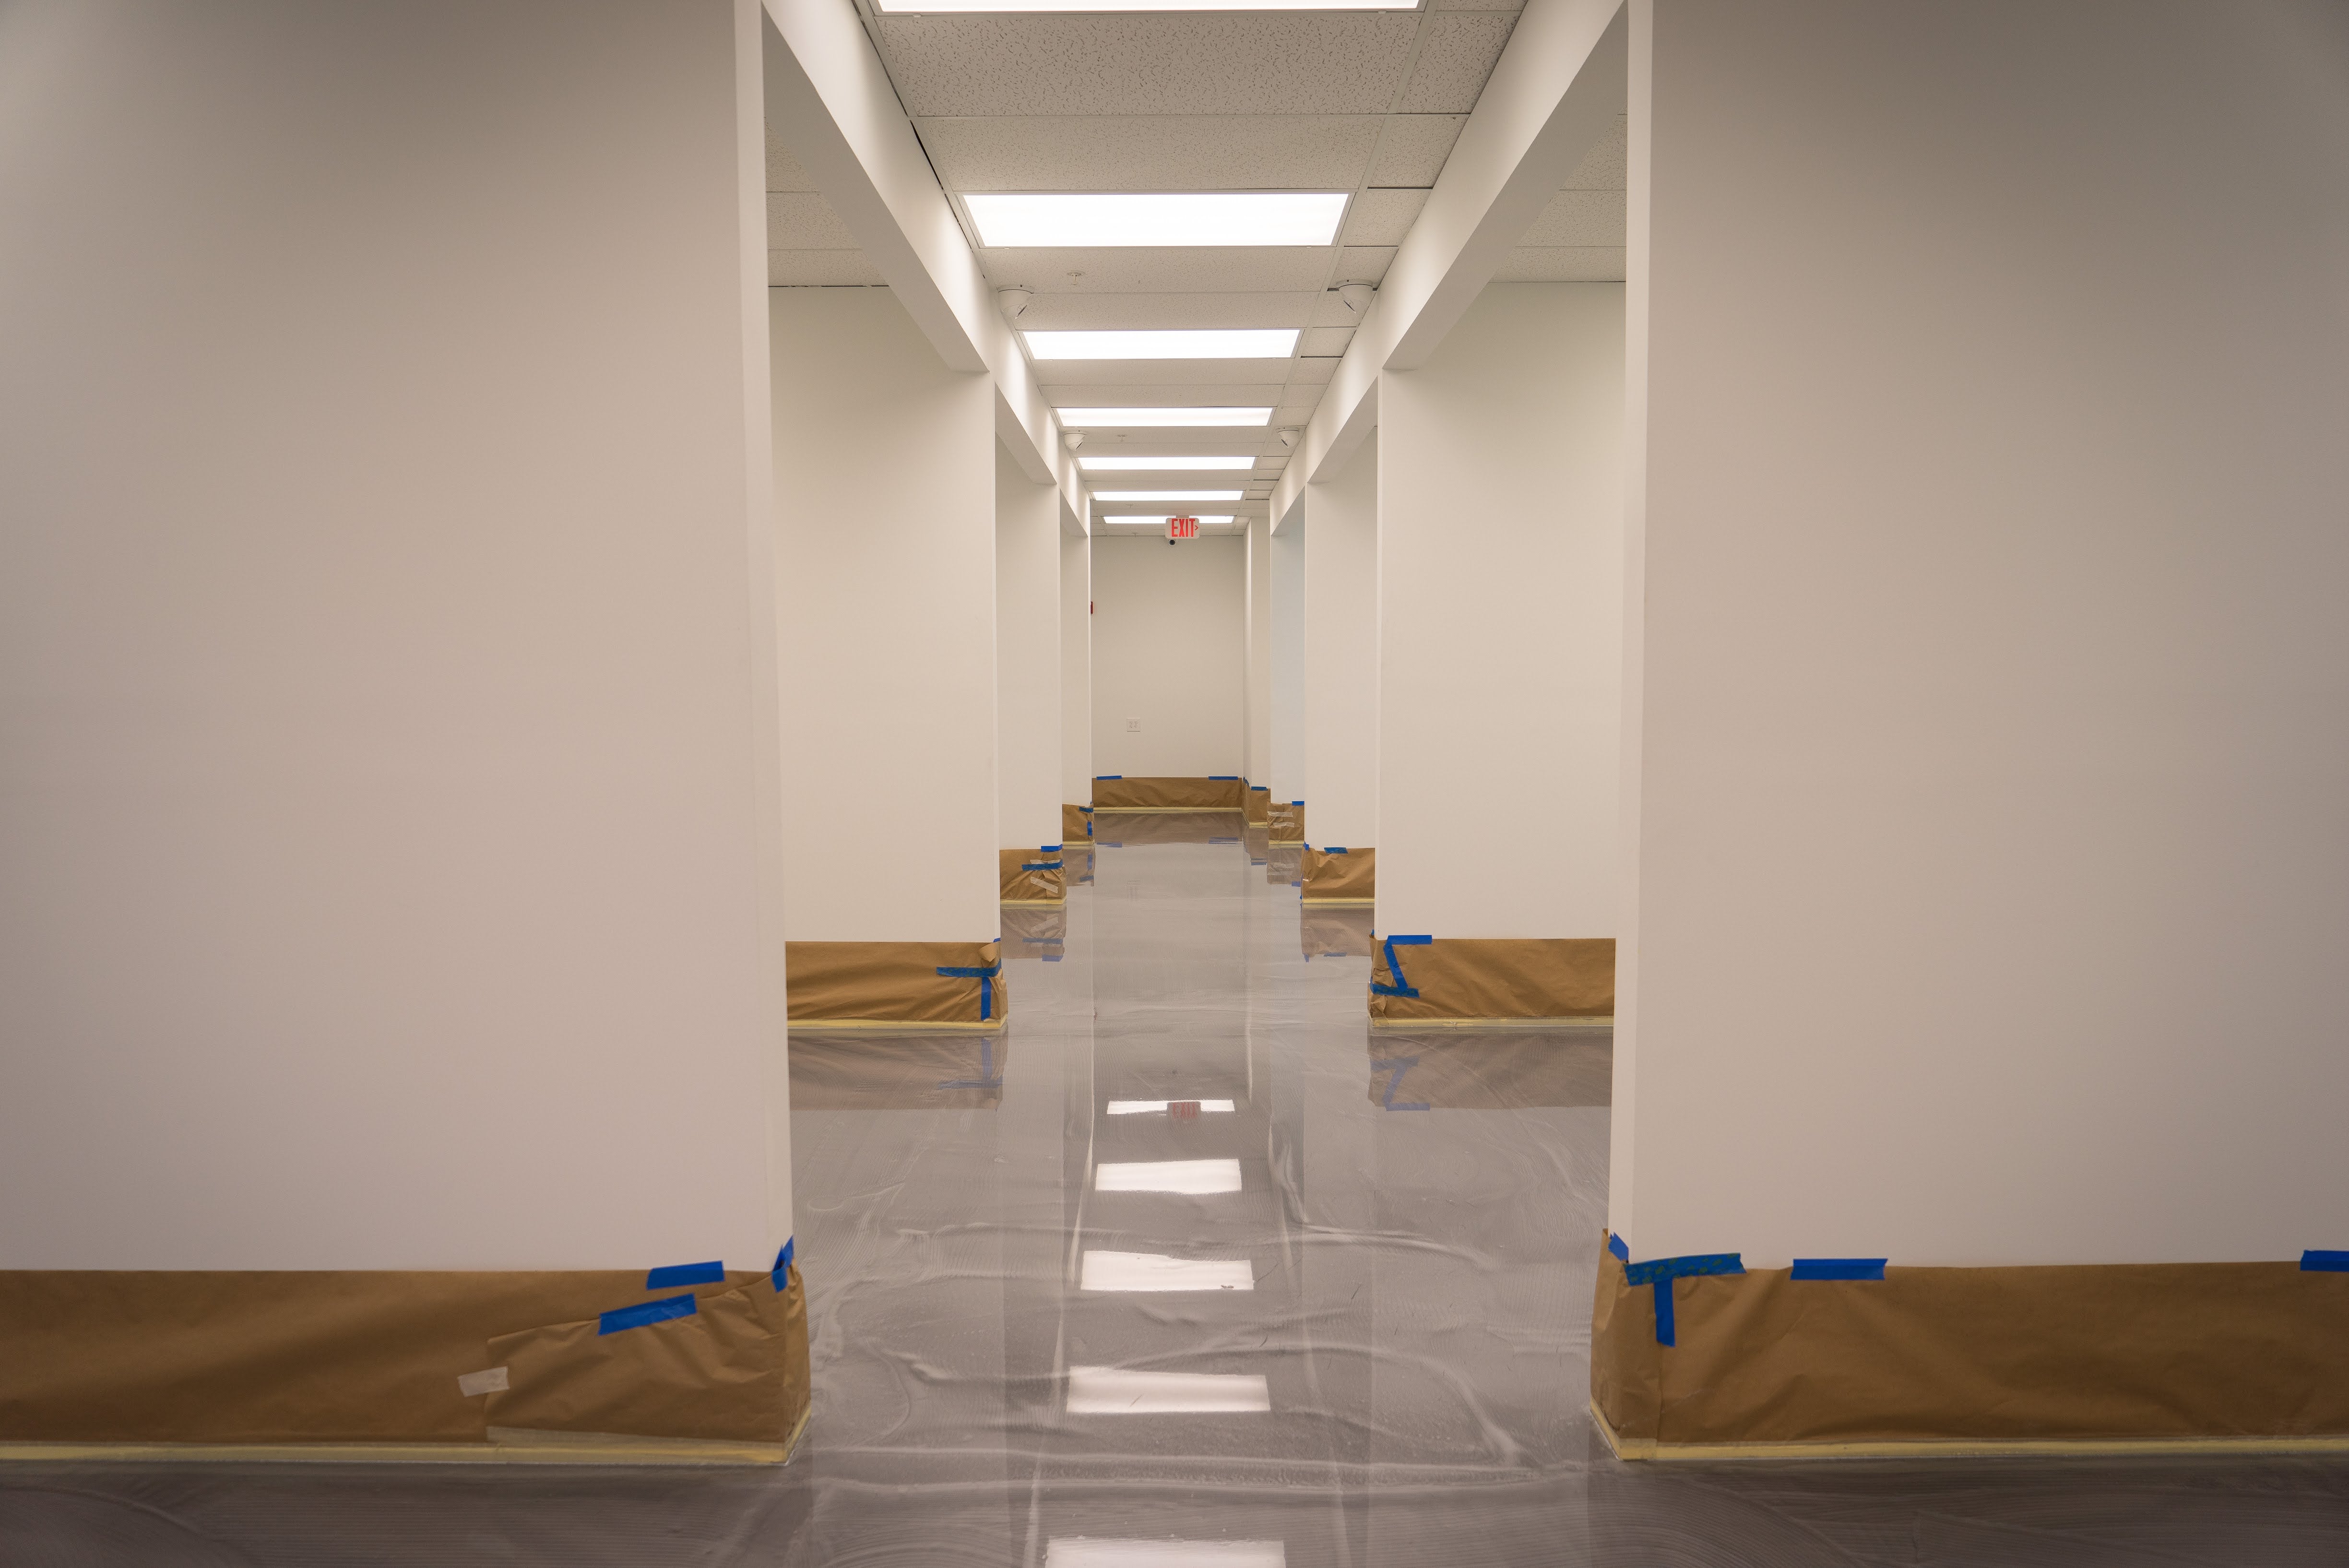 A hallway inside a commercial establishment with metallic epoxy floors | Xtreme Polishing Systems